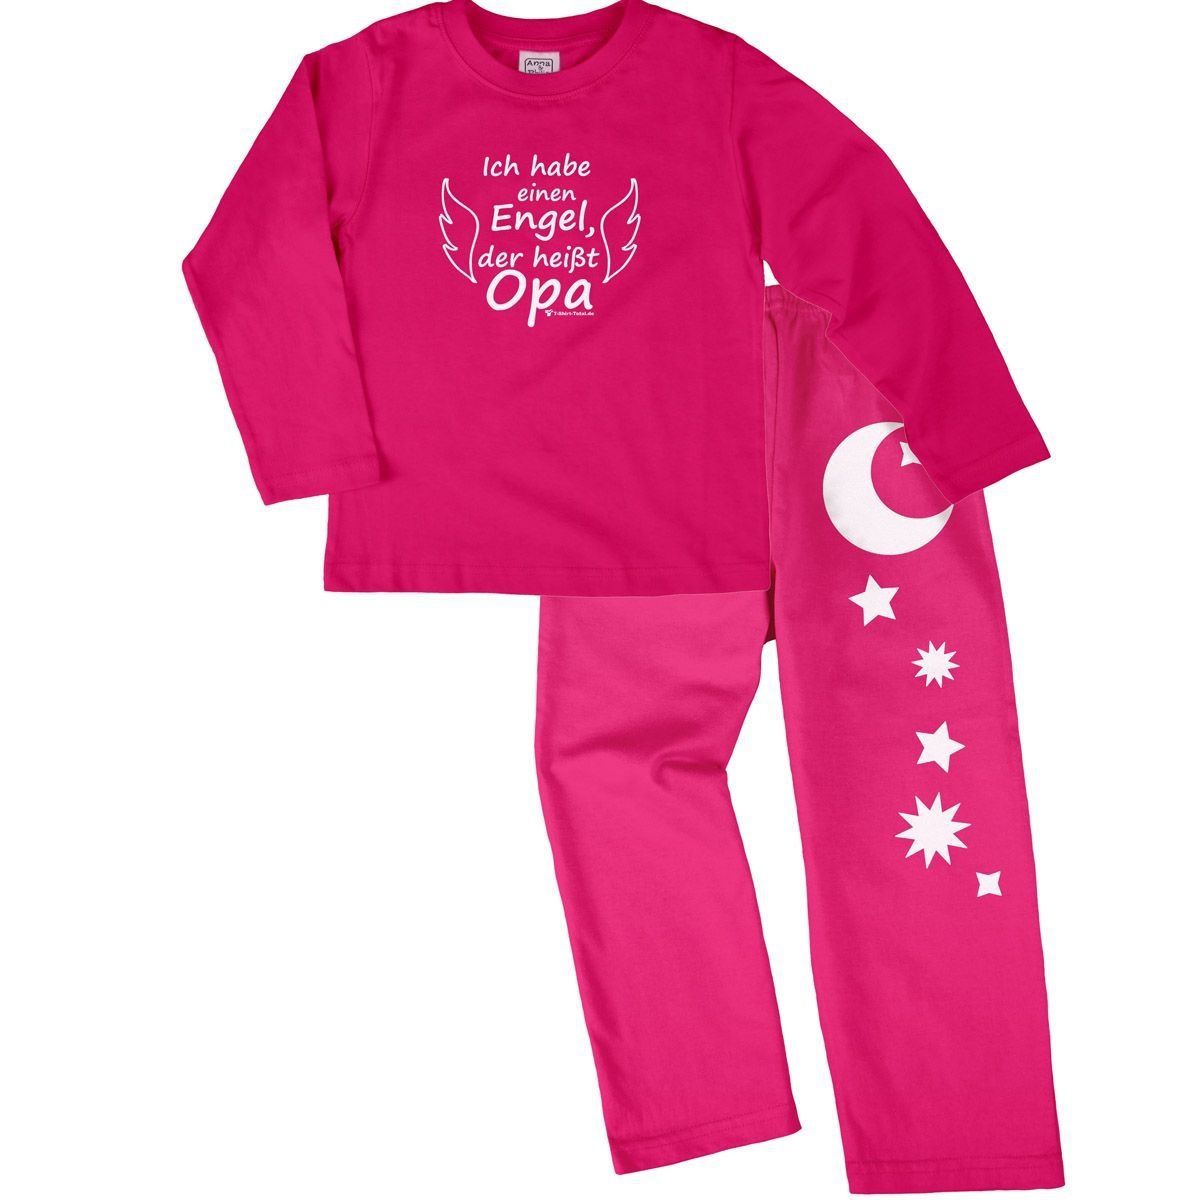 Engel Opa Pyjama Set pink / pink 110 / 116